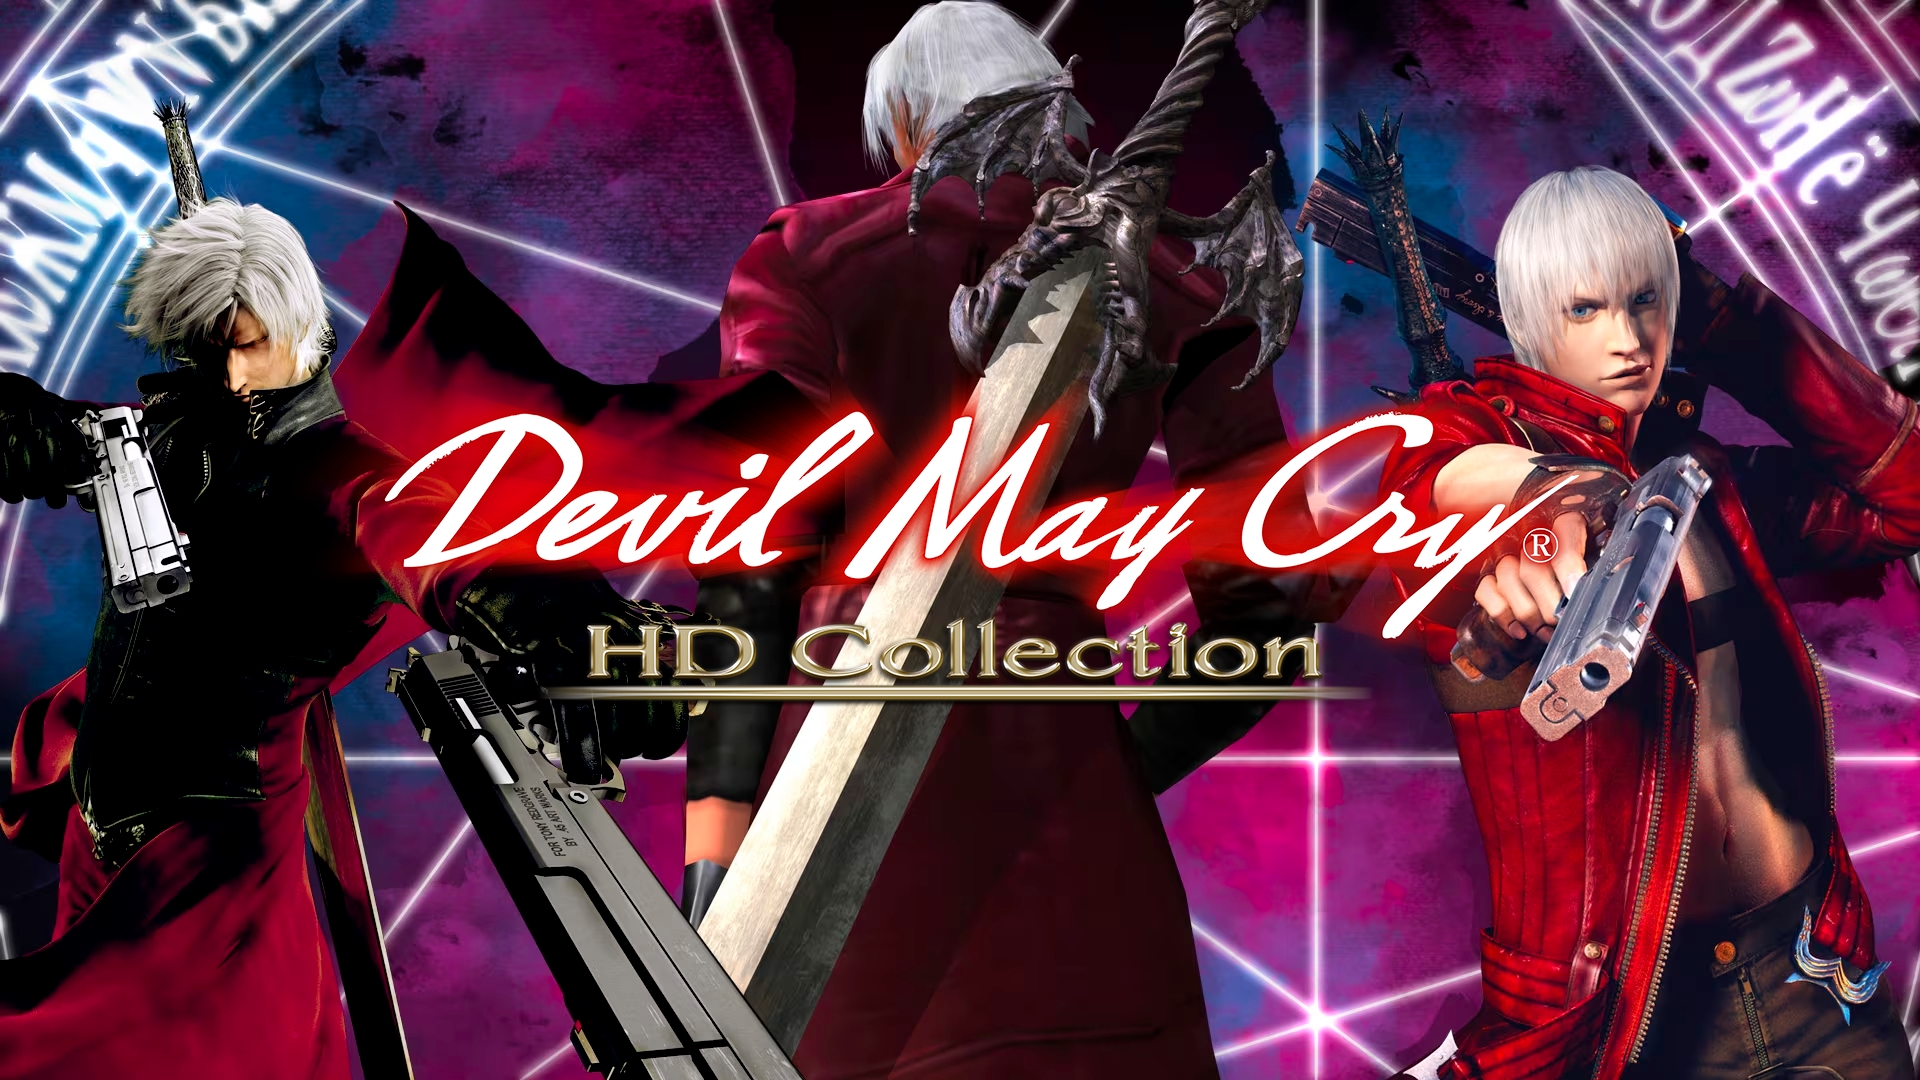 Devil May Cry 4 (special ) Xbox One 25 Digitos Digital